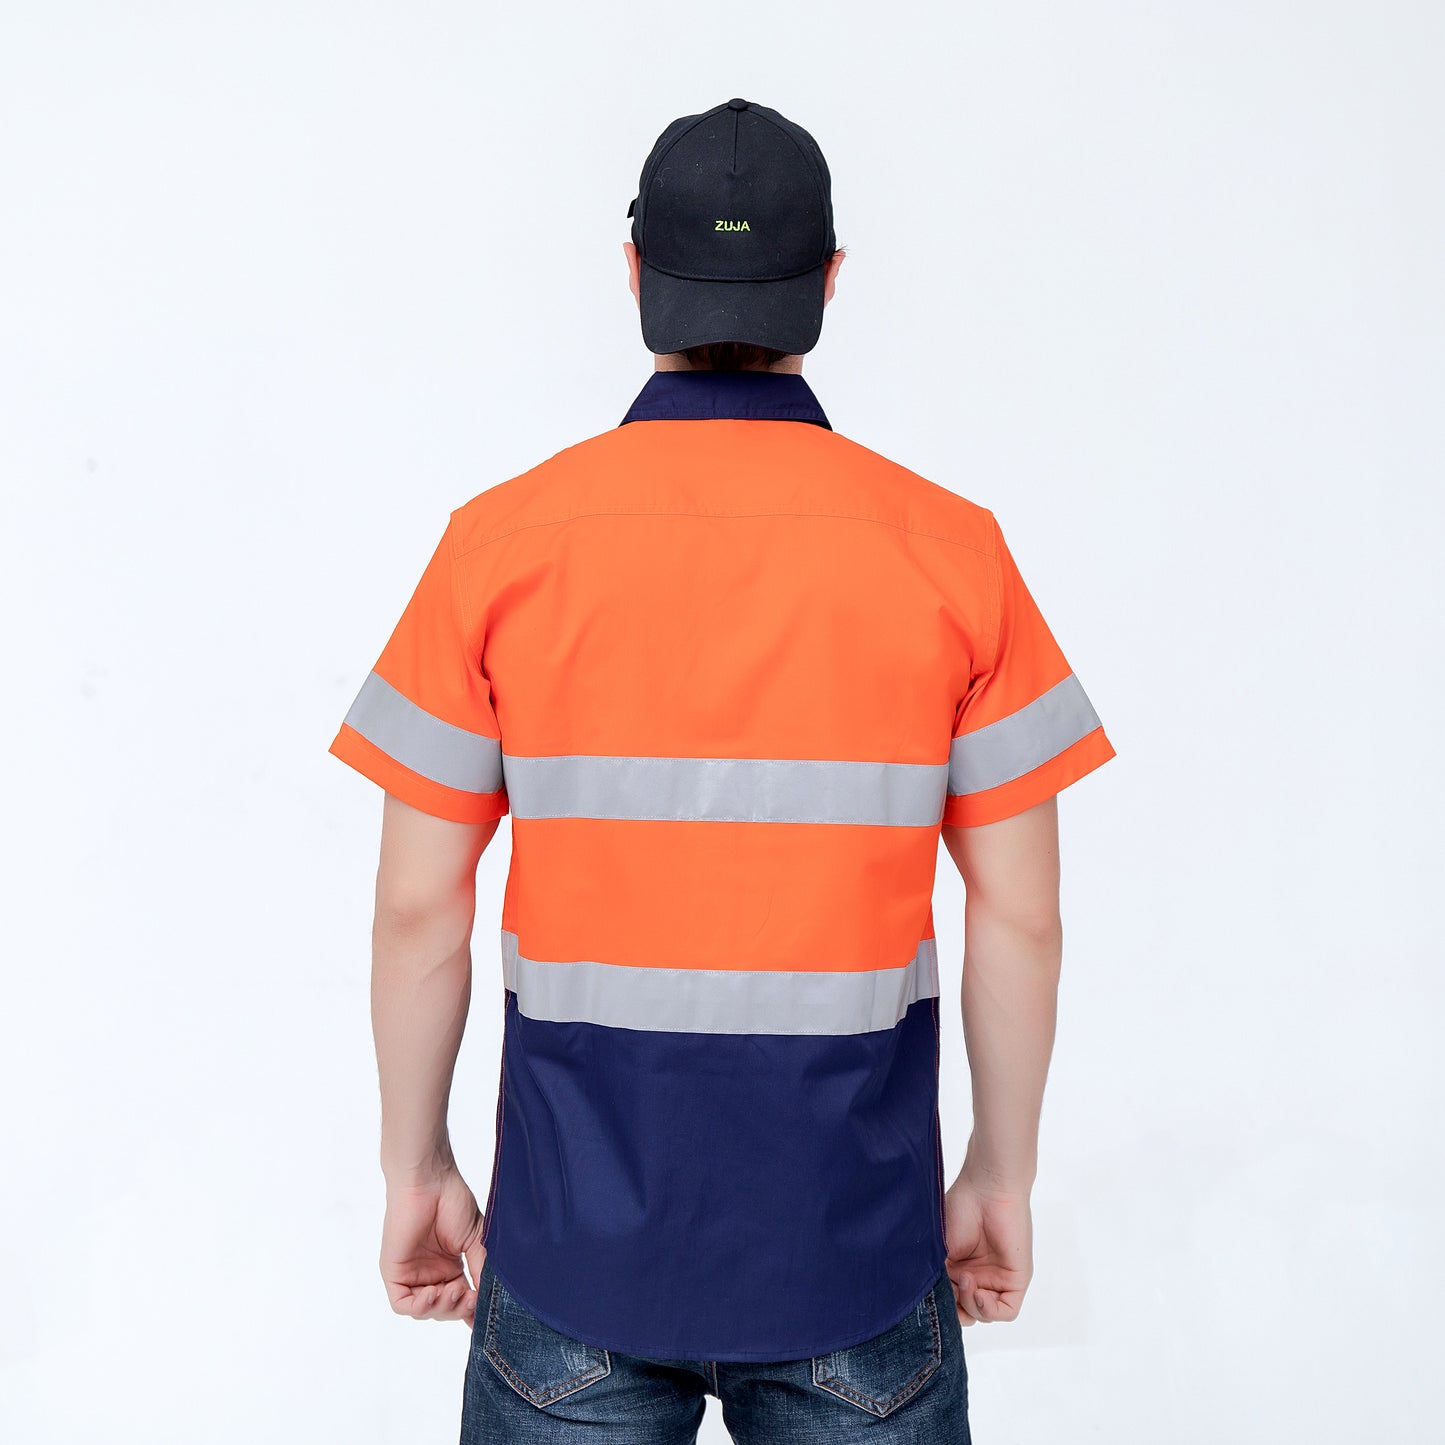 SMASYS Fluorescent Reflective Uniform Shirts Hi Vis Safety Construction Workwear